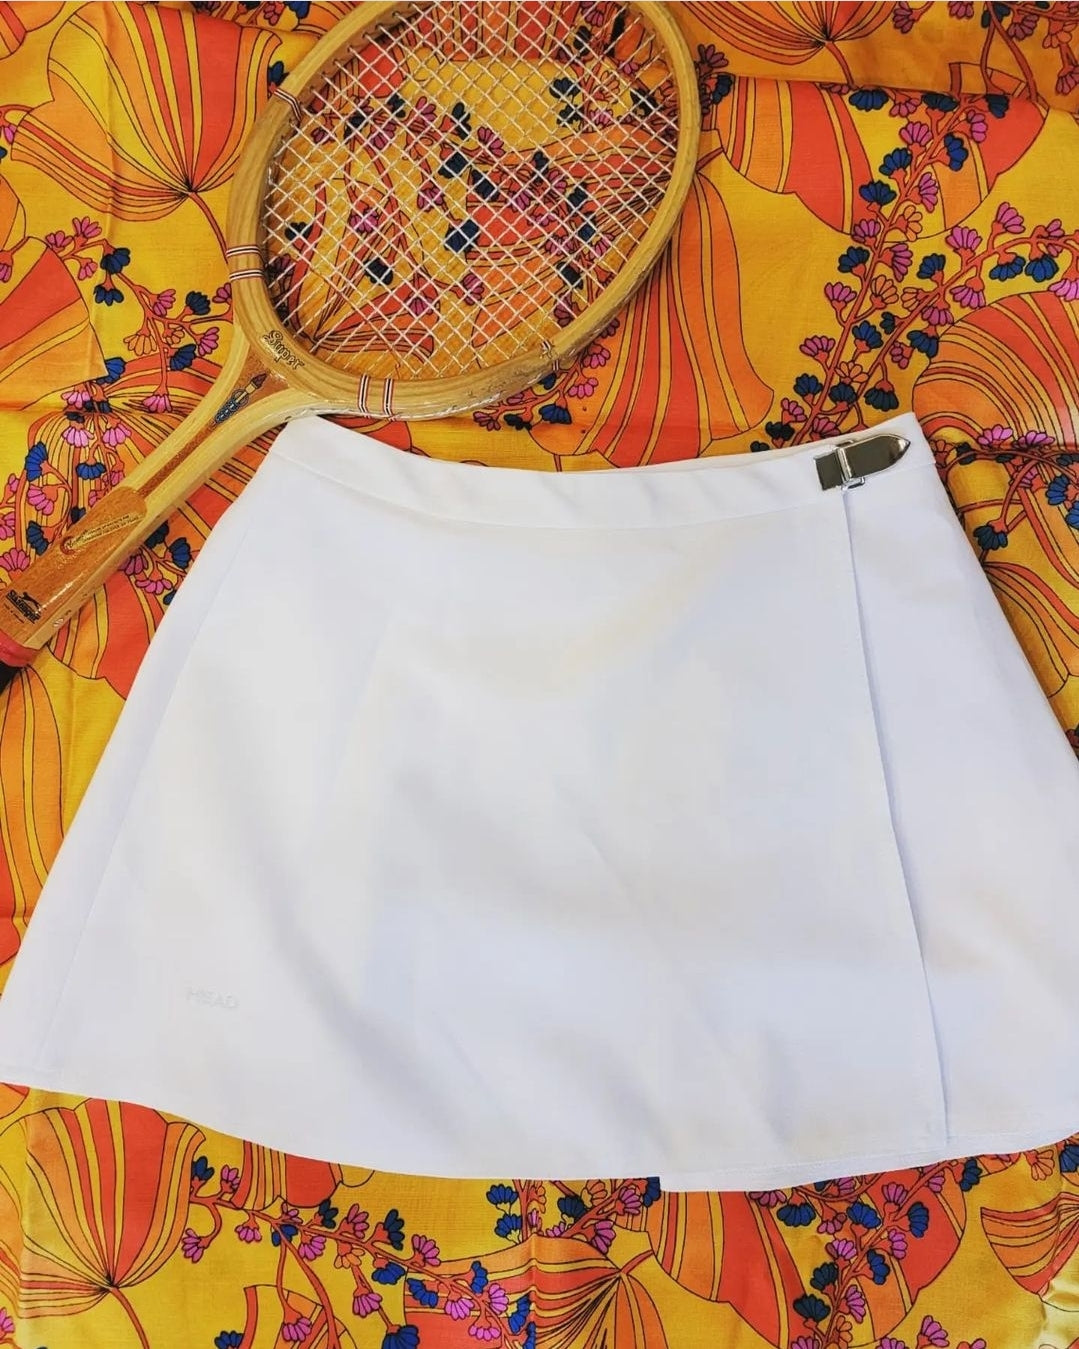 70s Like New "HEAD" Tennis Skirt